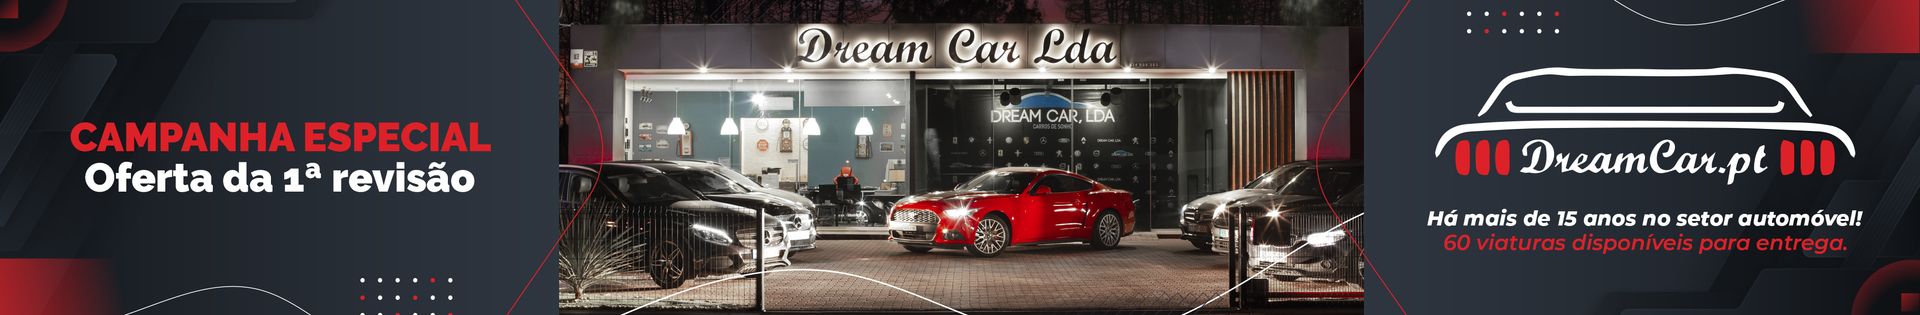 Dream Car Lda - Vagos top banner